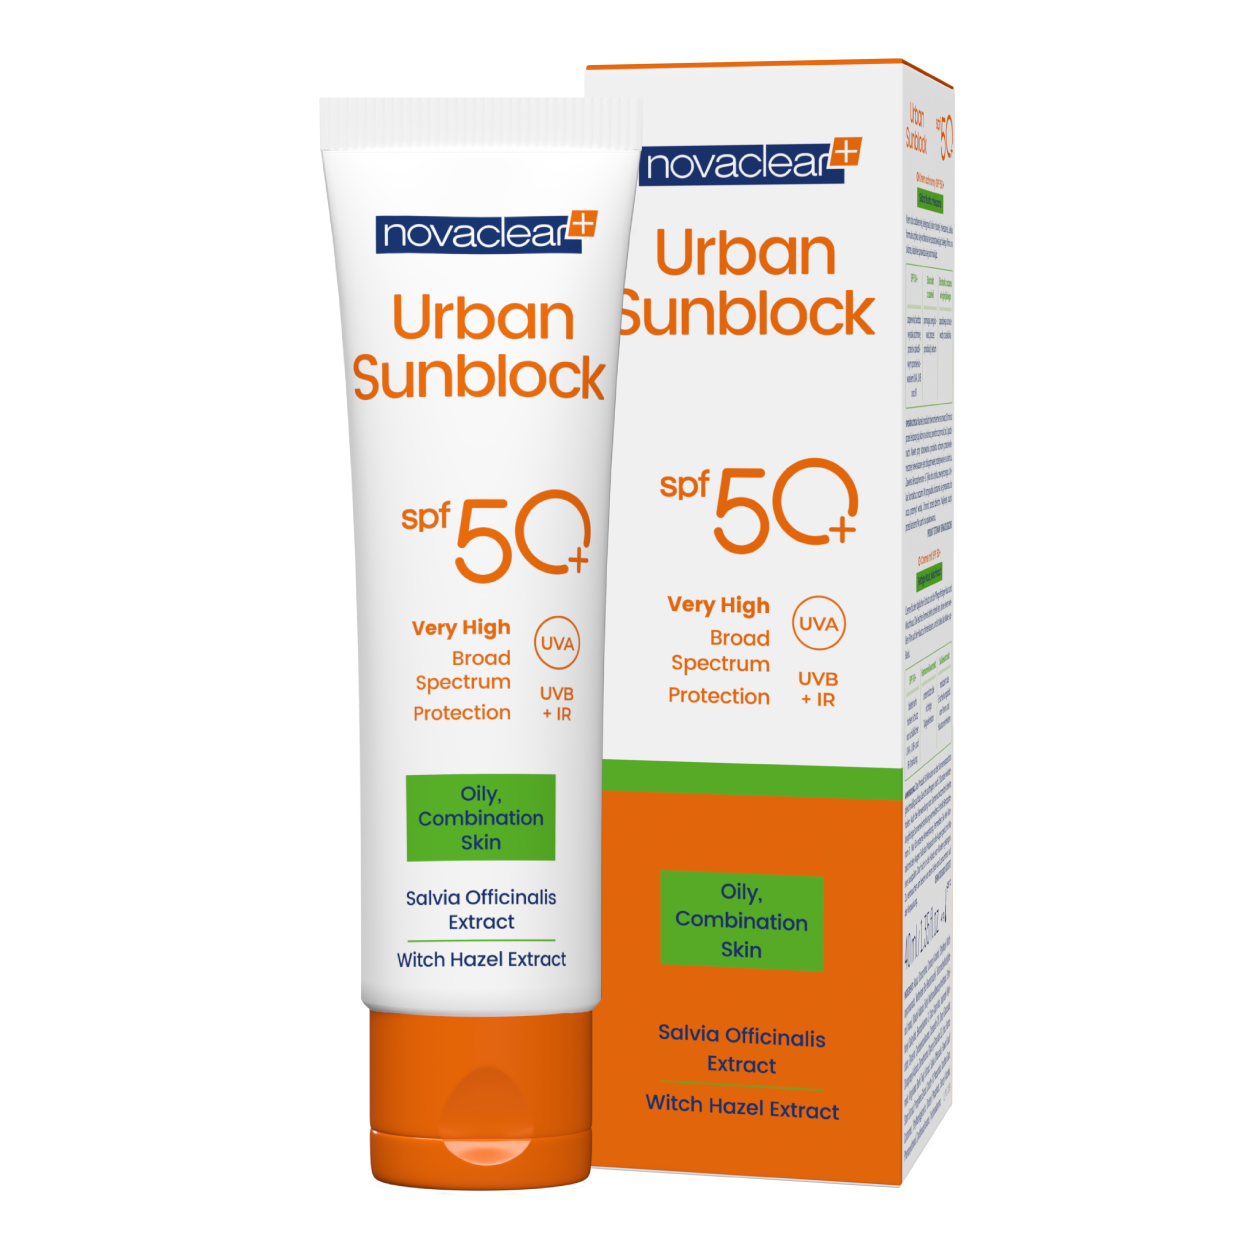 novaclear-urban-sunblock-very-high-protection-spf-50+-oily-combination-skin